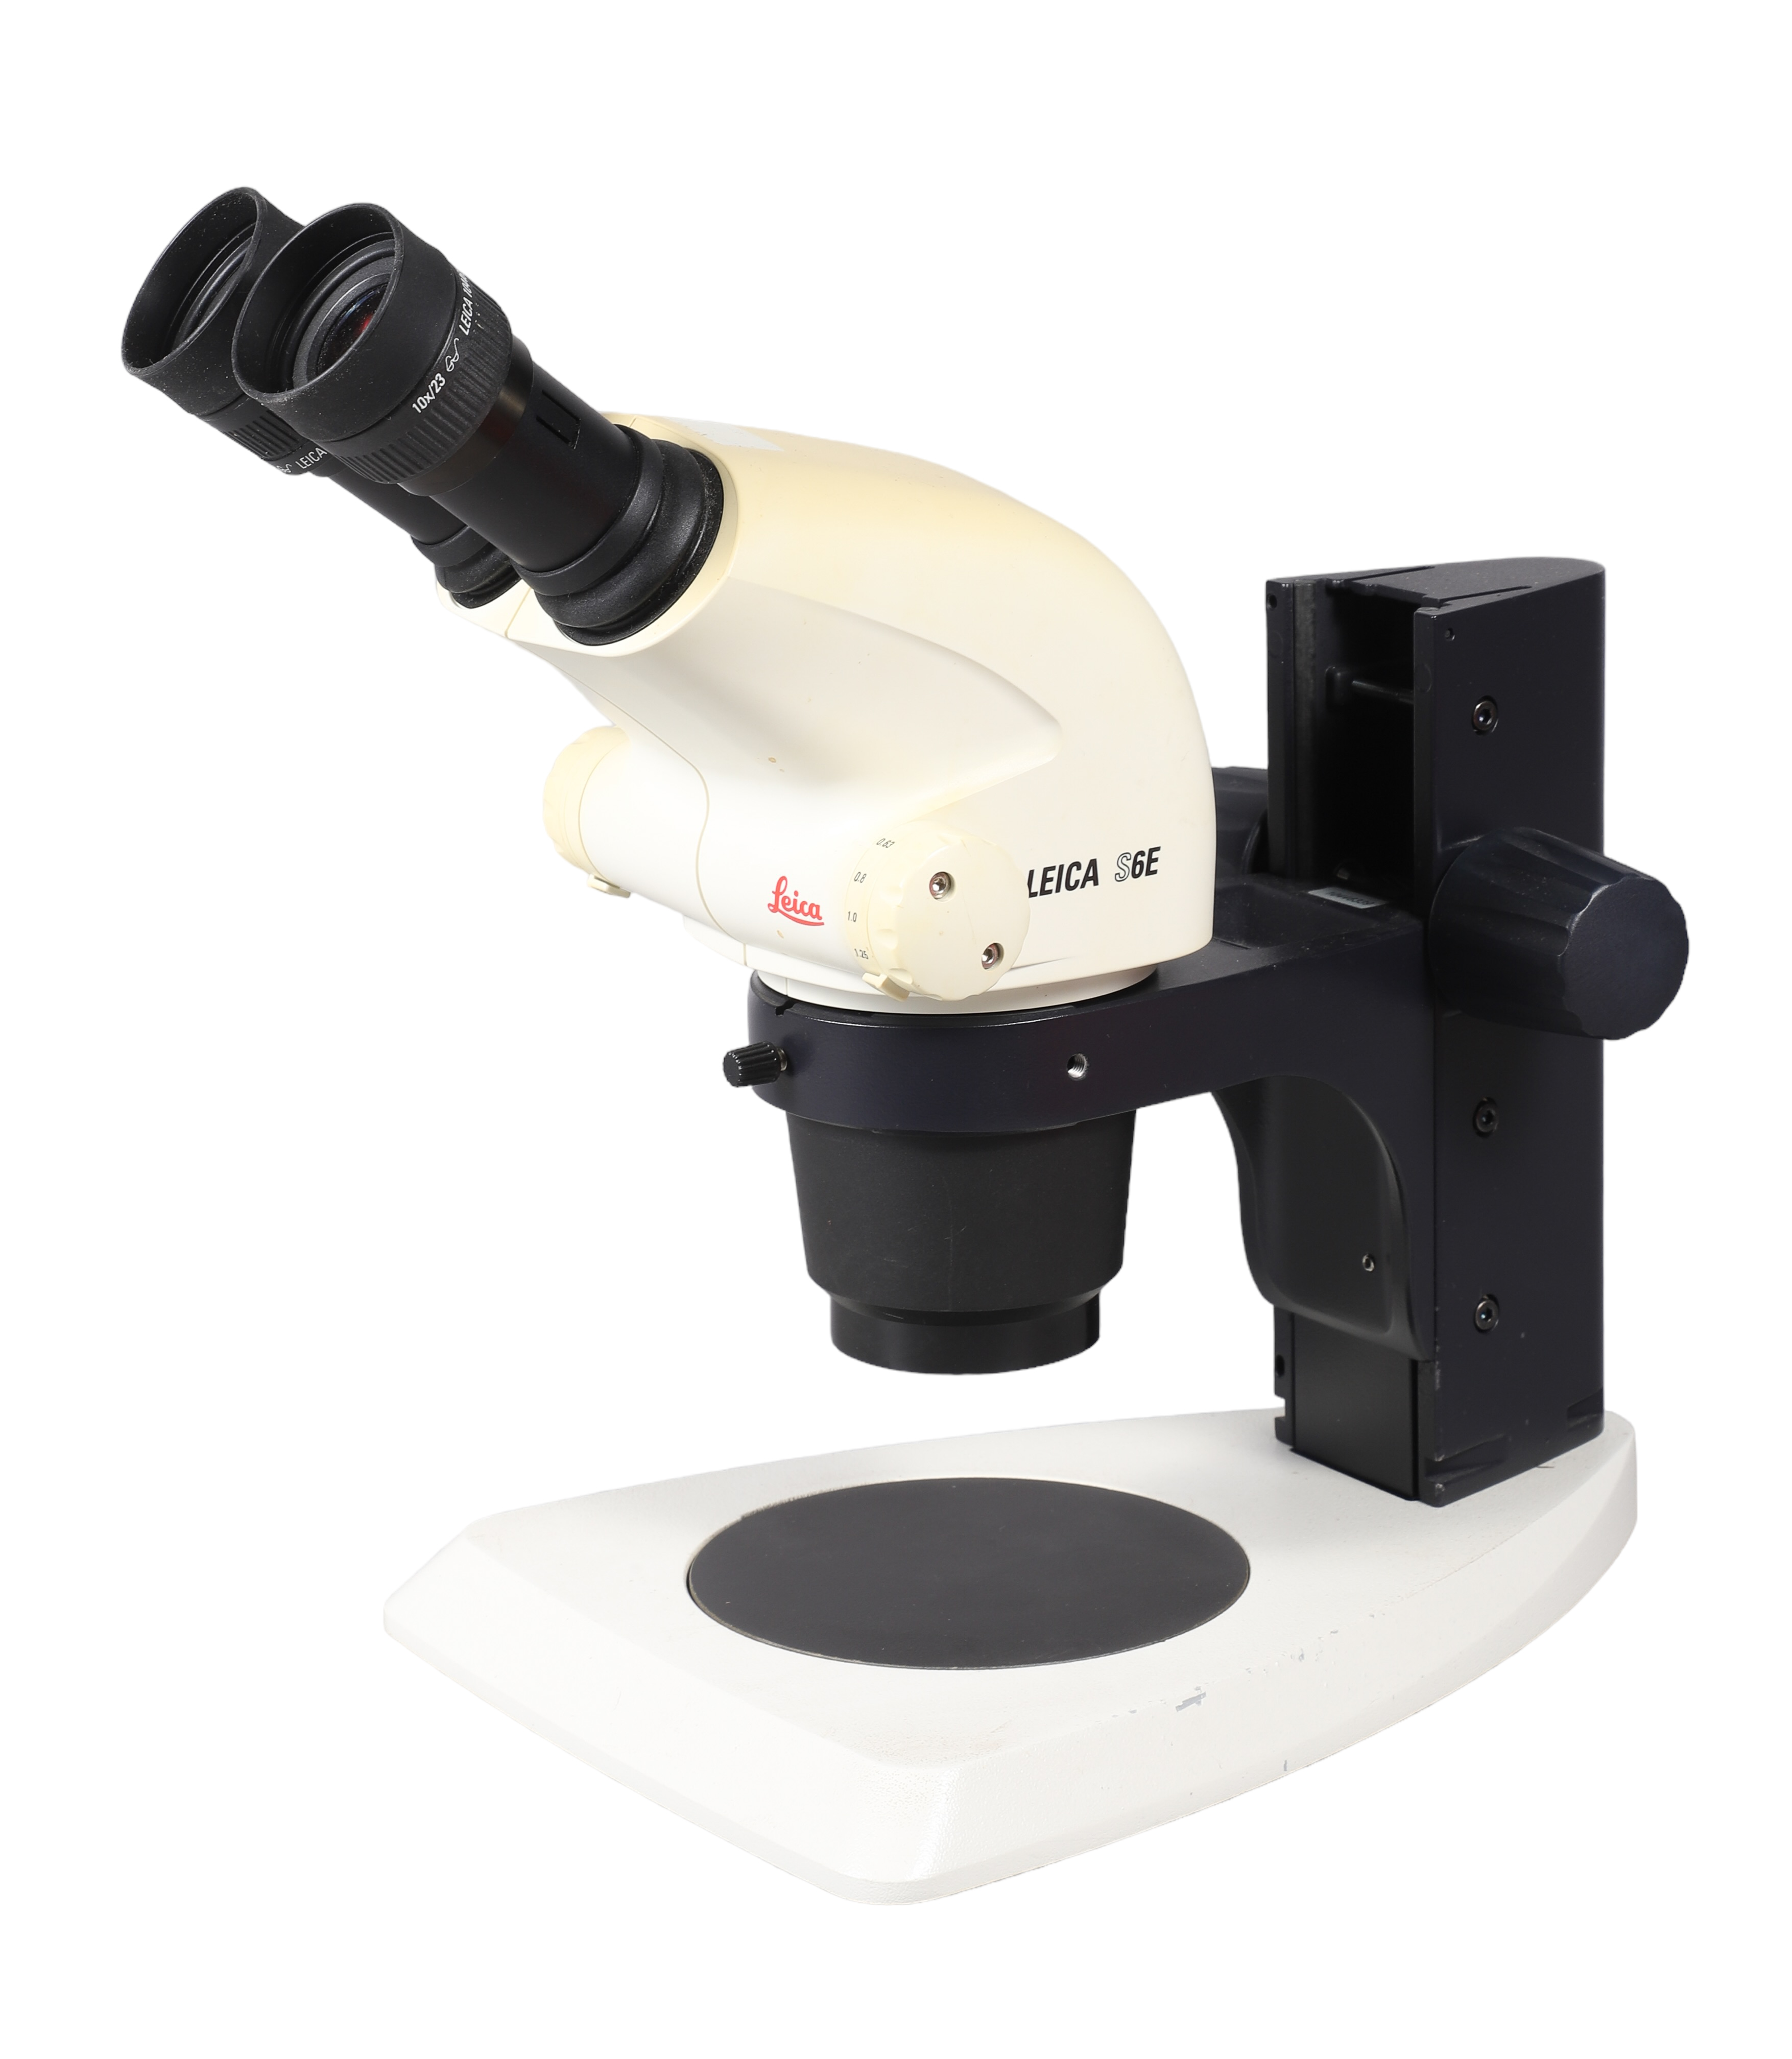 Leica Stereo Microscope S6E, serial